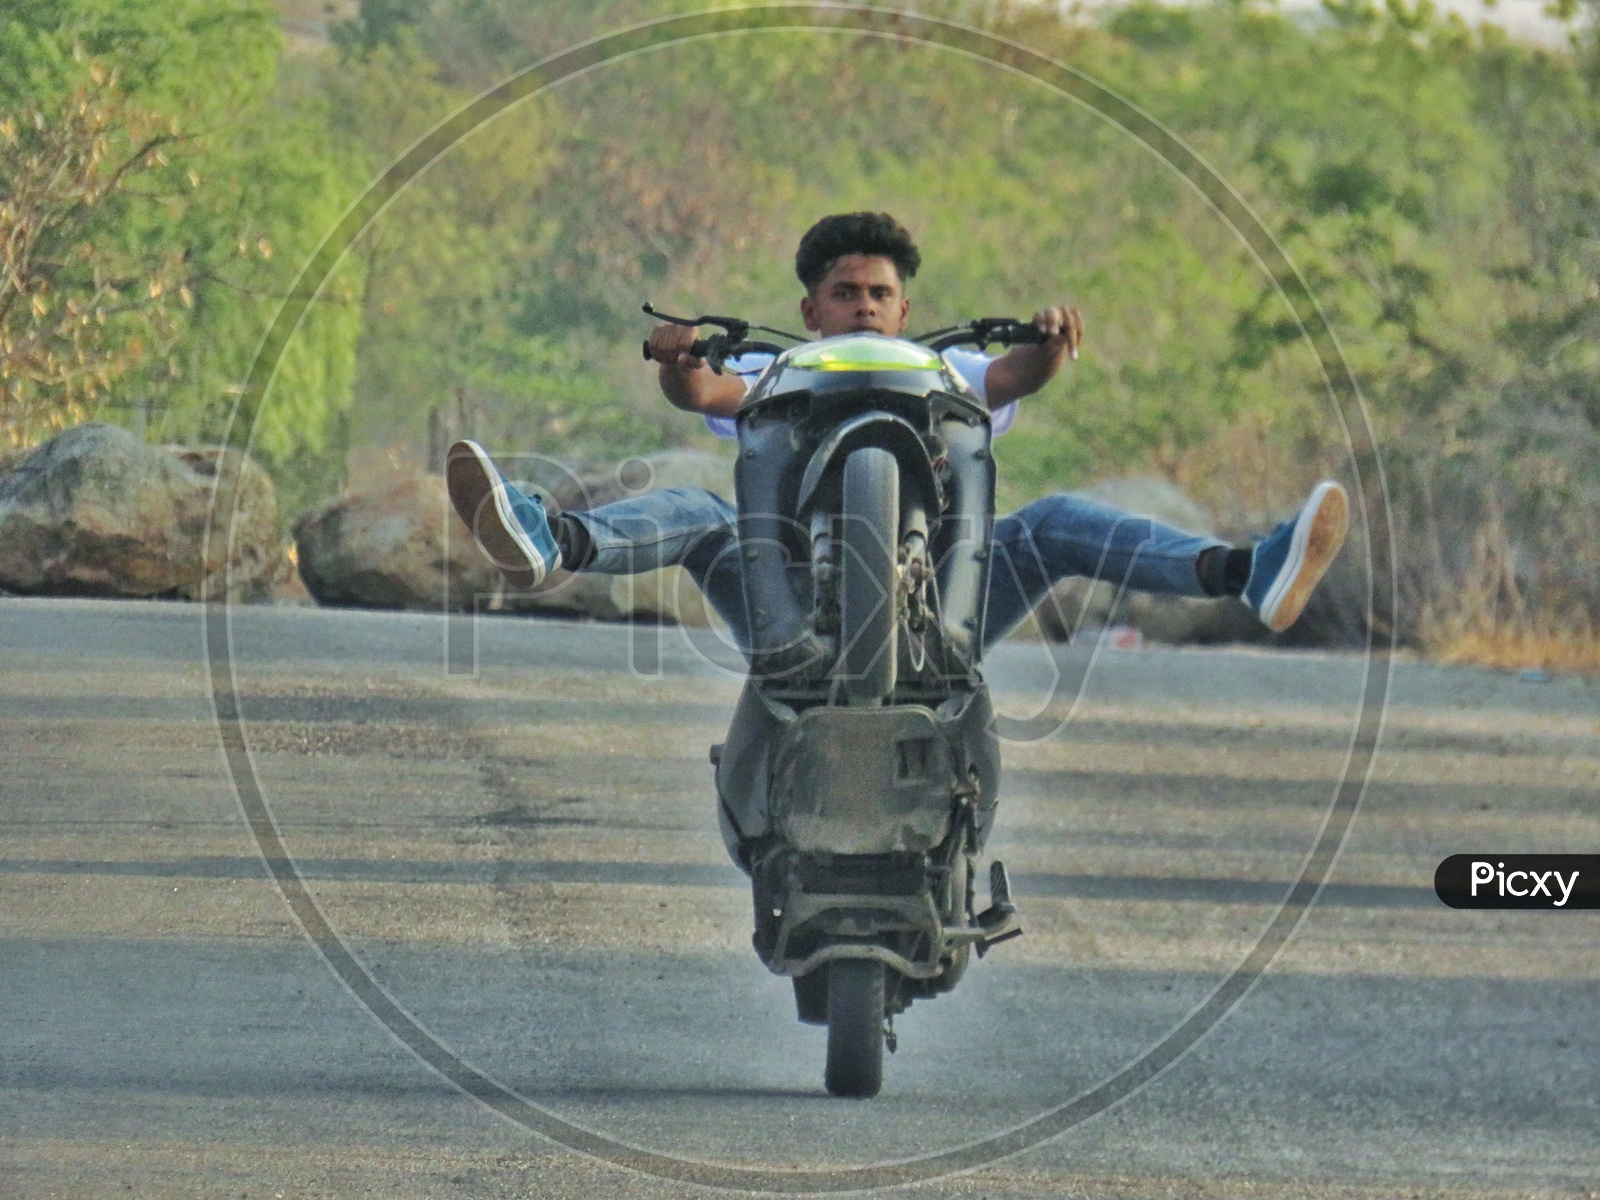 Motorcycle stunt riding